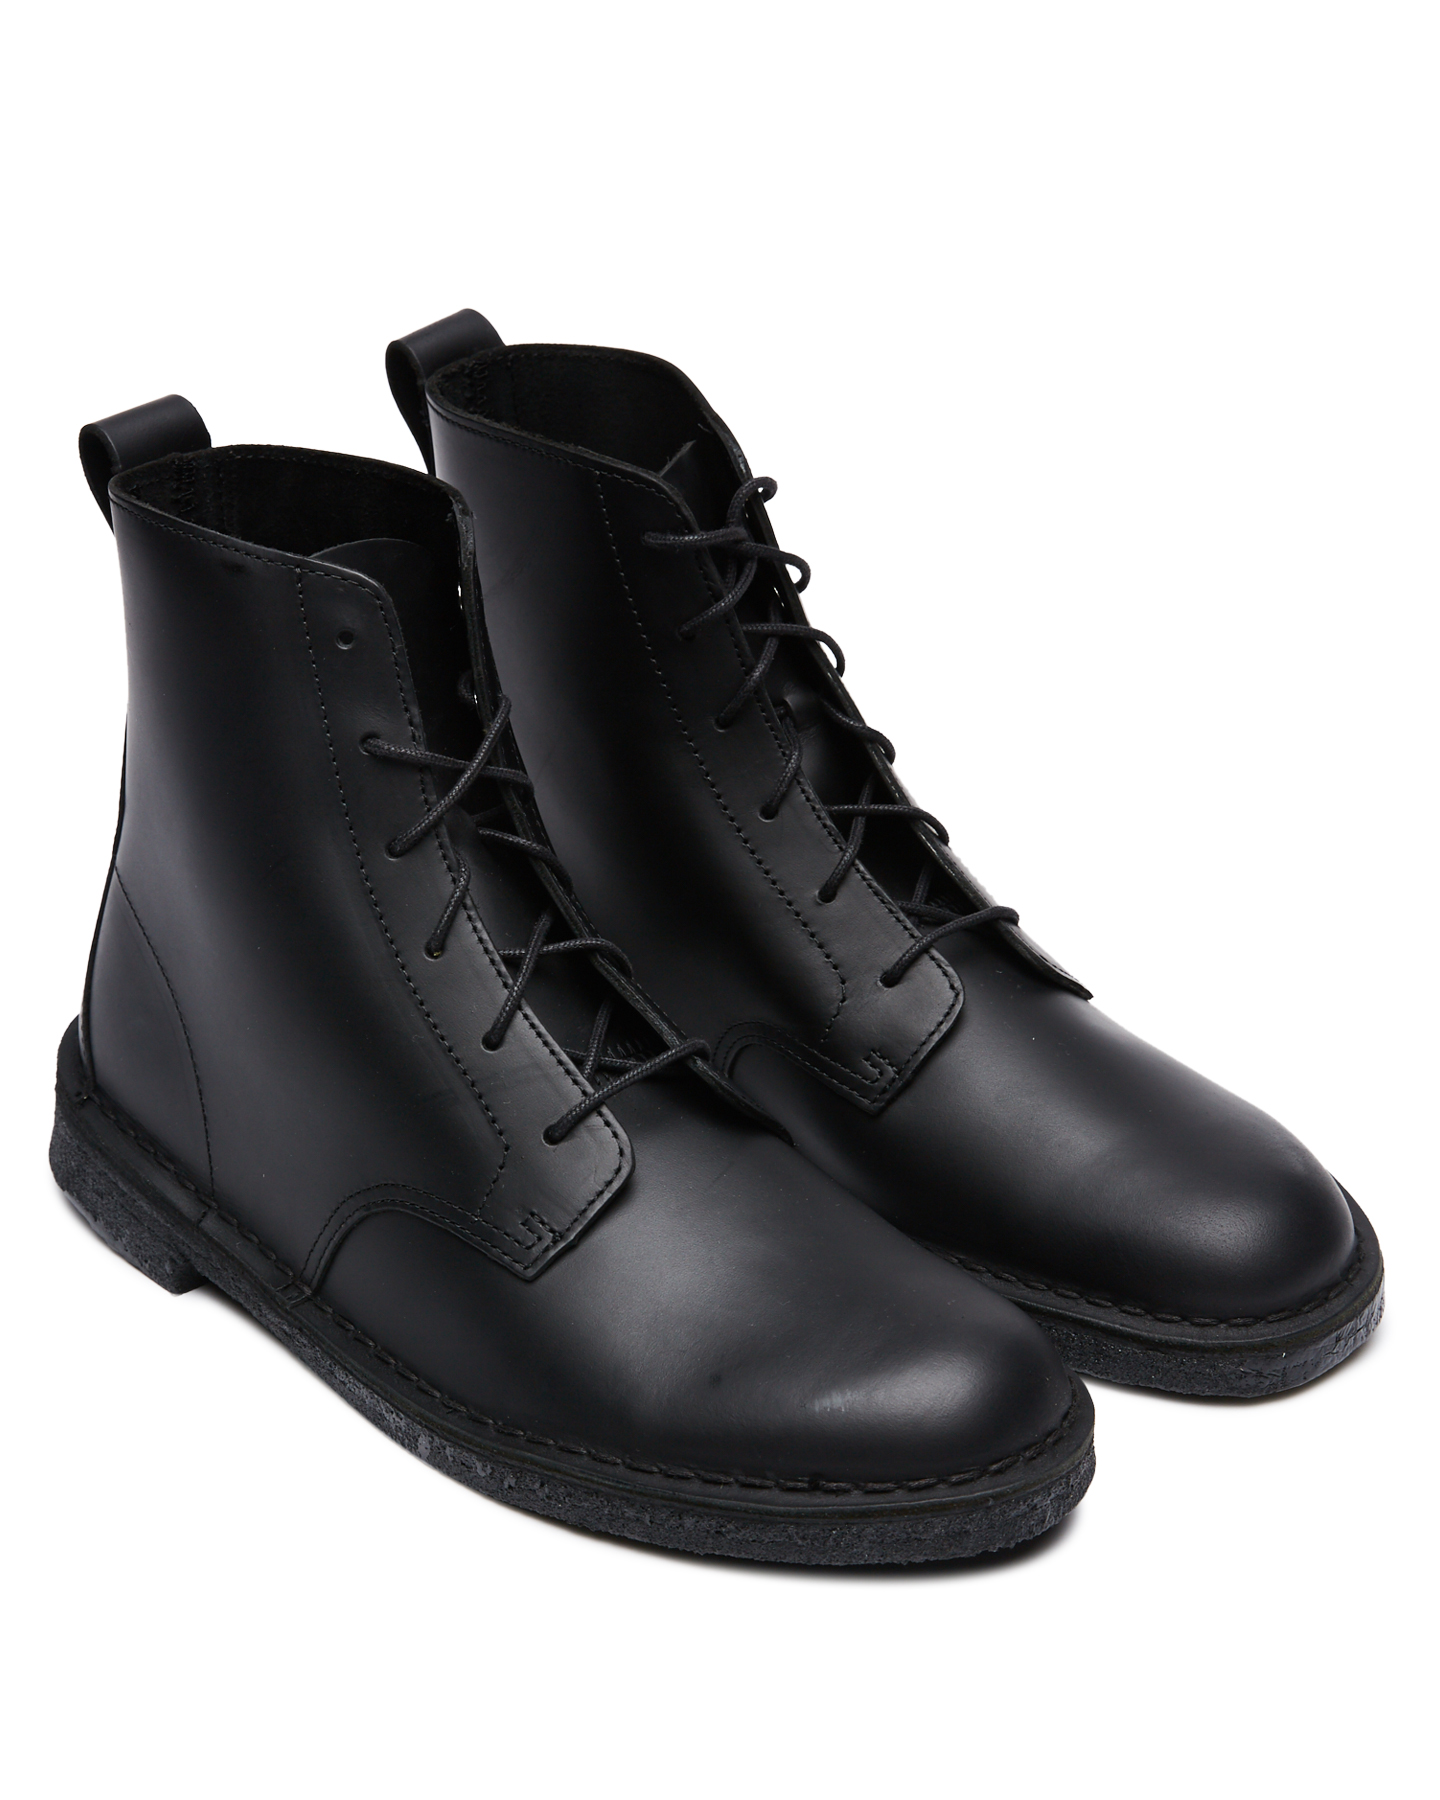 clarks originals desert mali boots black leather